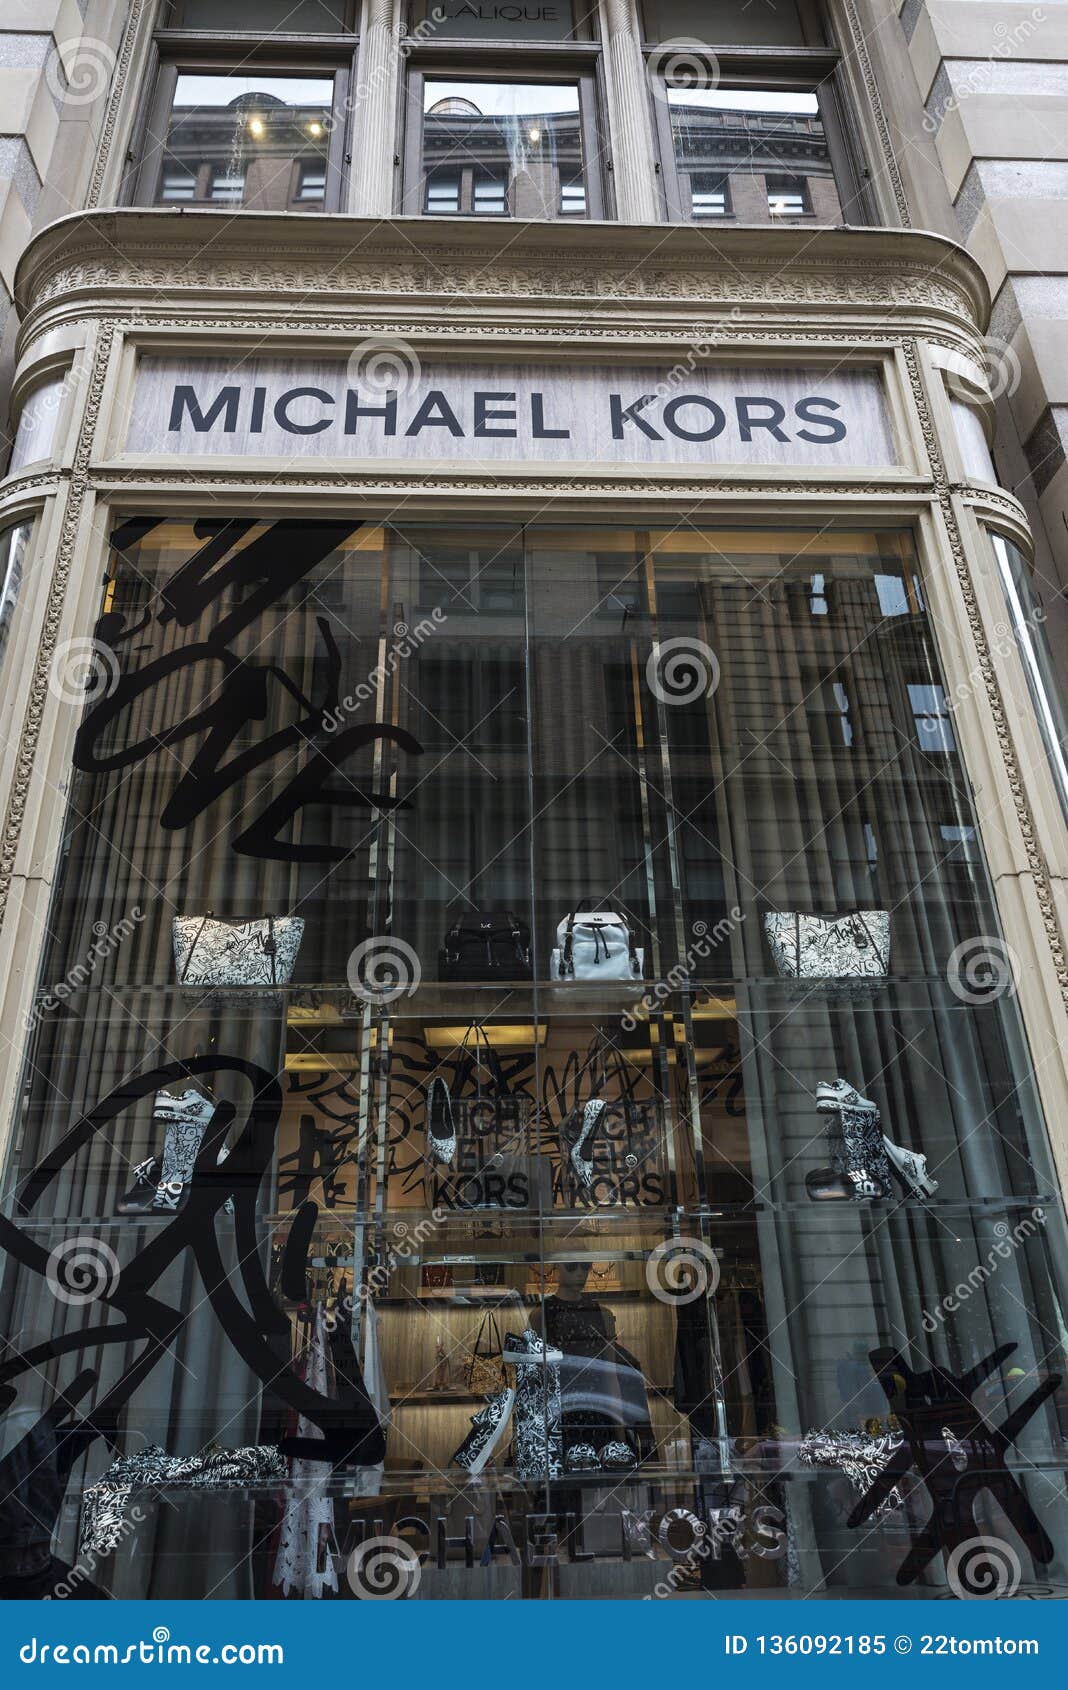 Michael kors new york 46720m6110